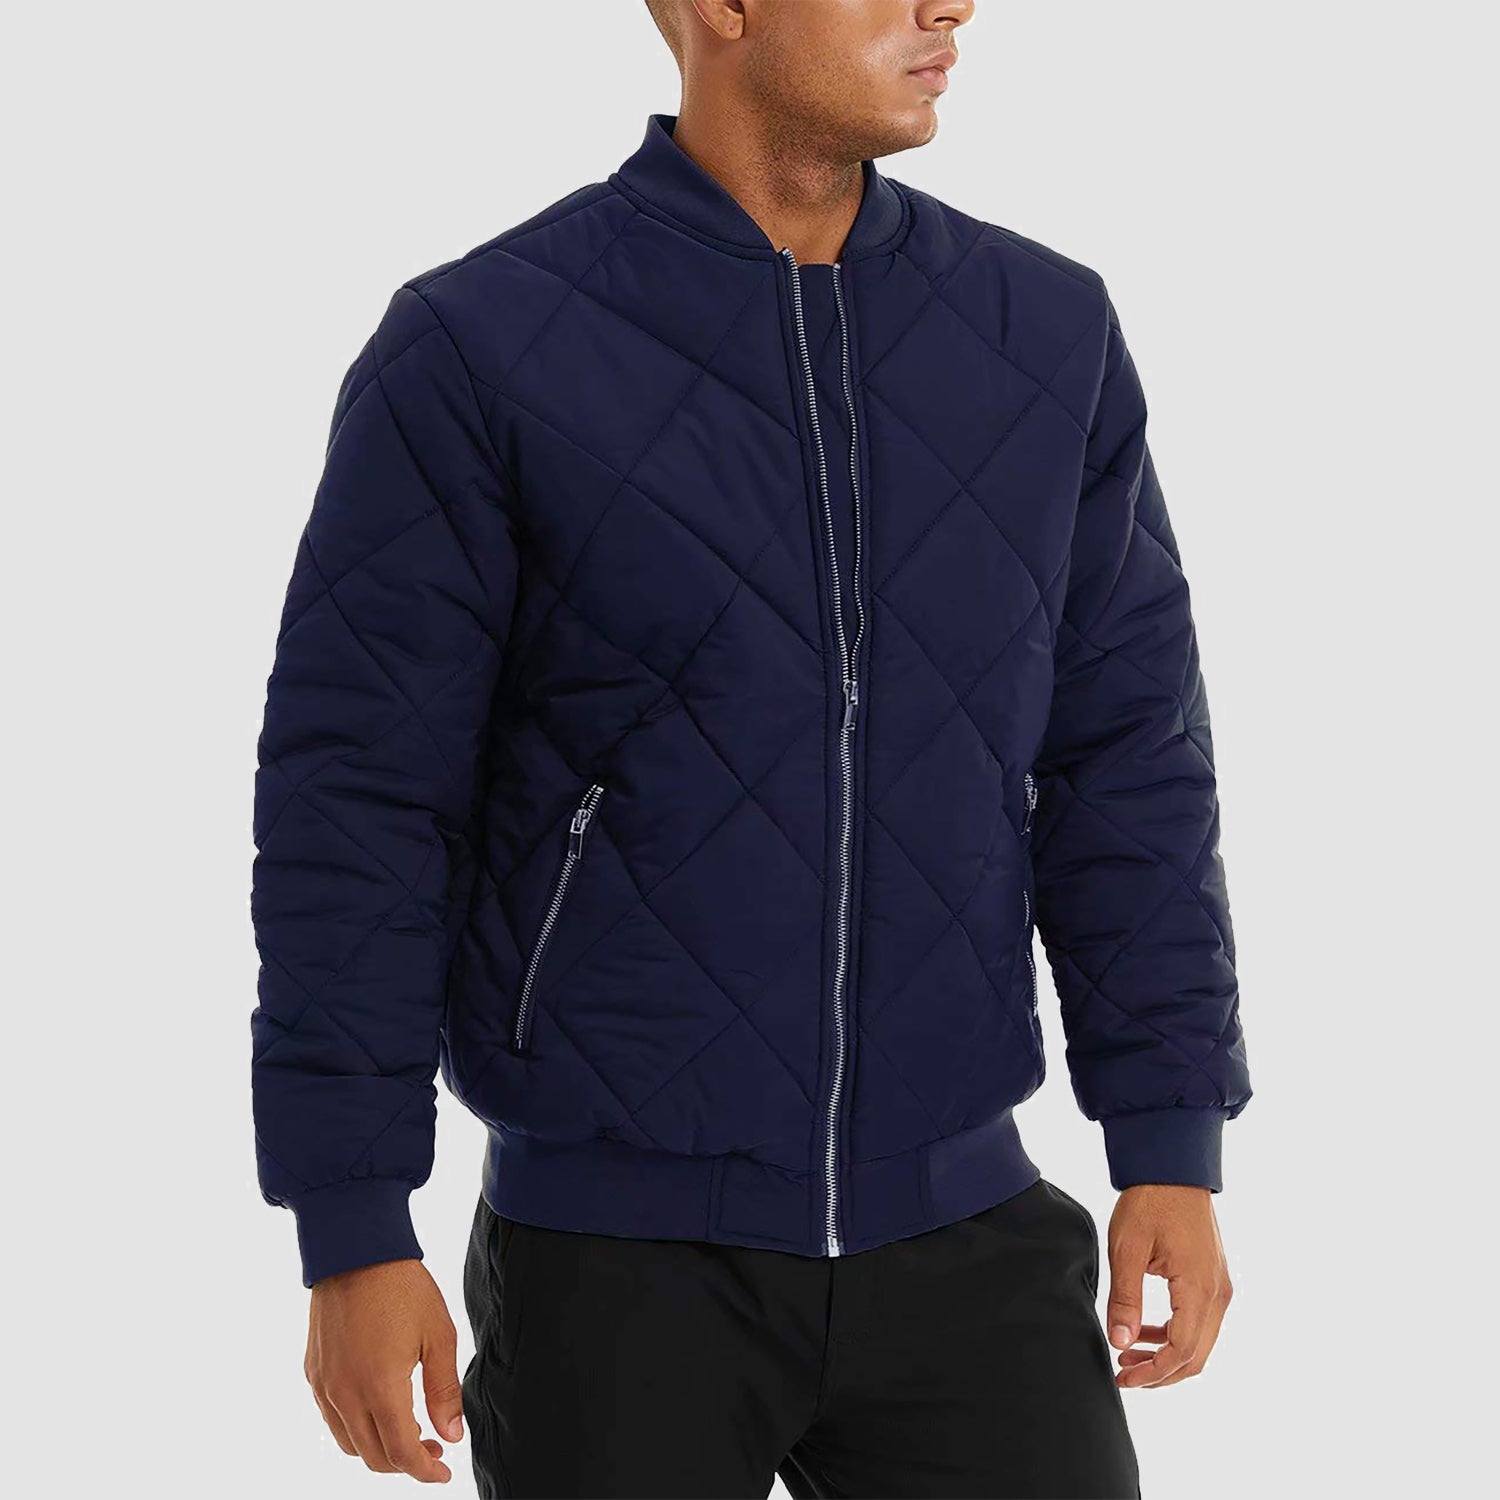 Men's Winter Bomber Jacket Outerwear with Zipper Pockets Thicken